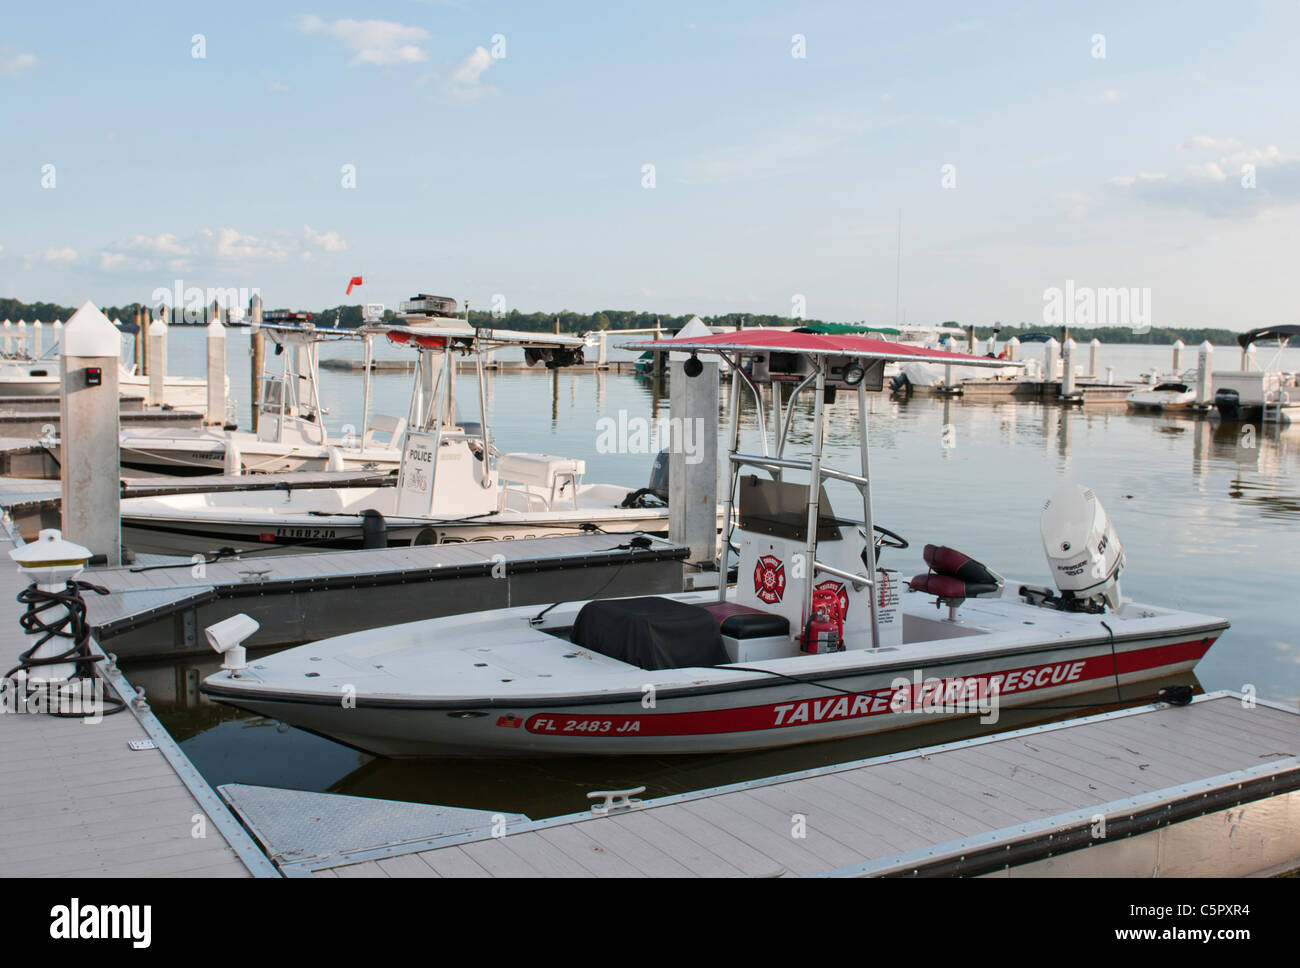 Fire Rescue Boat Tavares, Florida USA Seaport Airport Lakeport Stock Photo